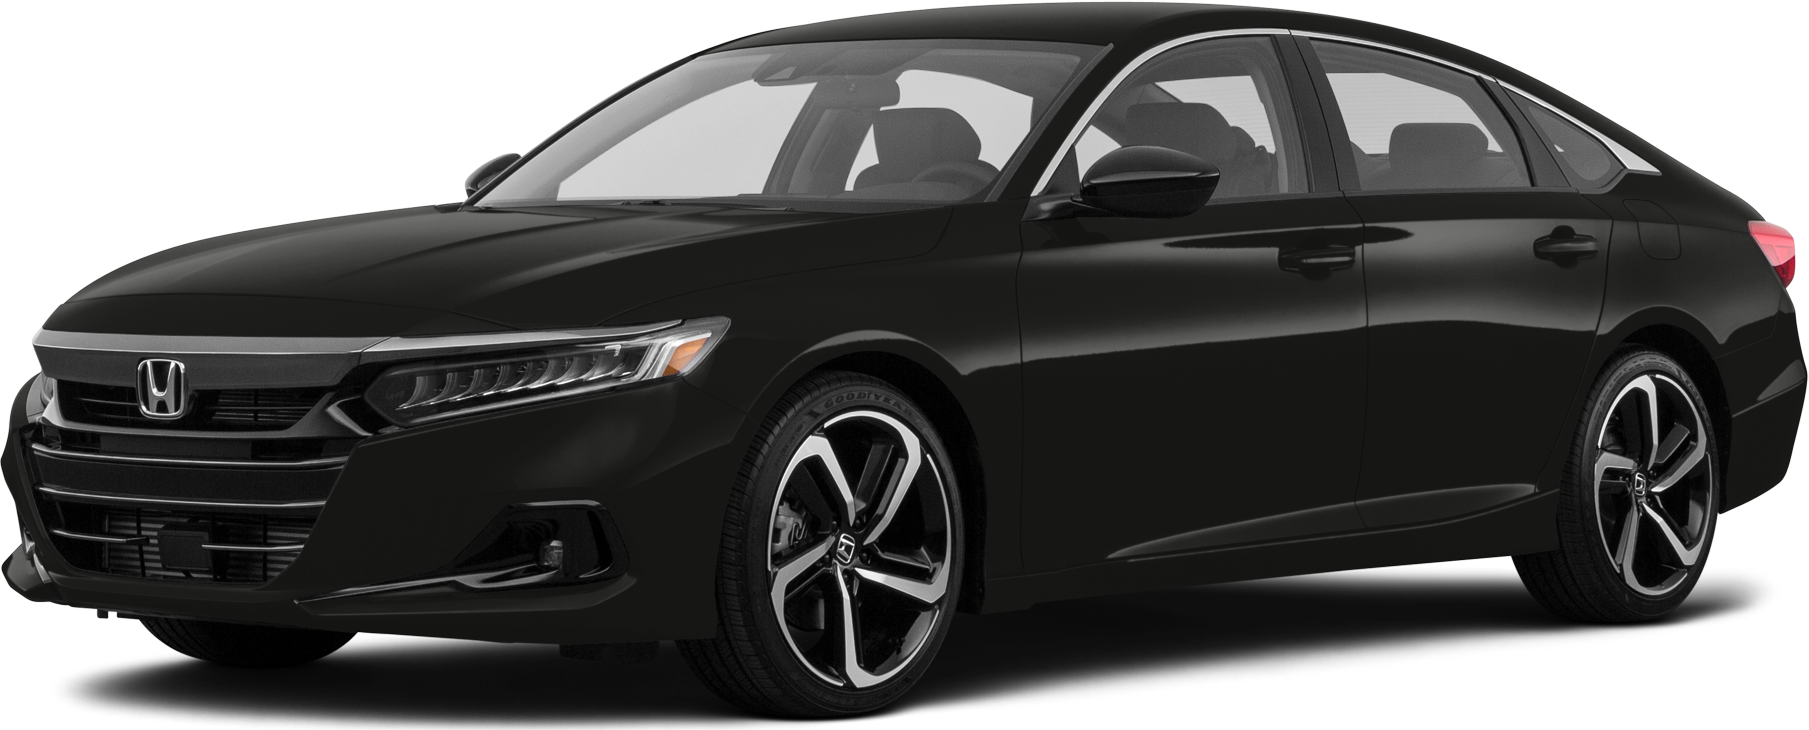 2021 Honda Accord Reviews, Pricing & Specs | Kelley Blue Book